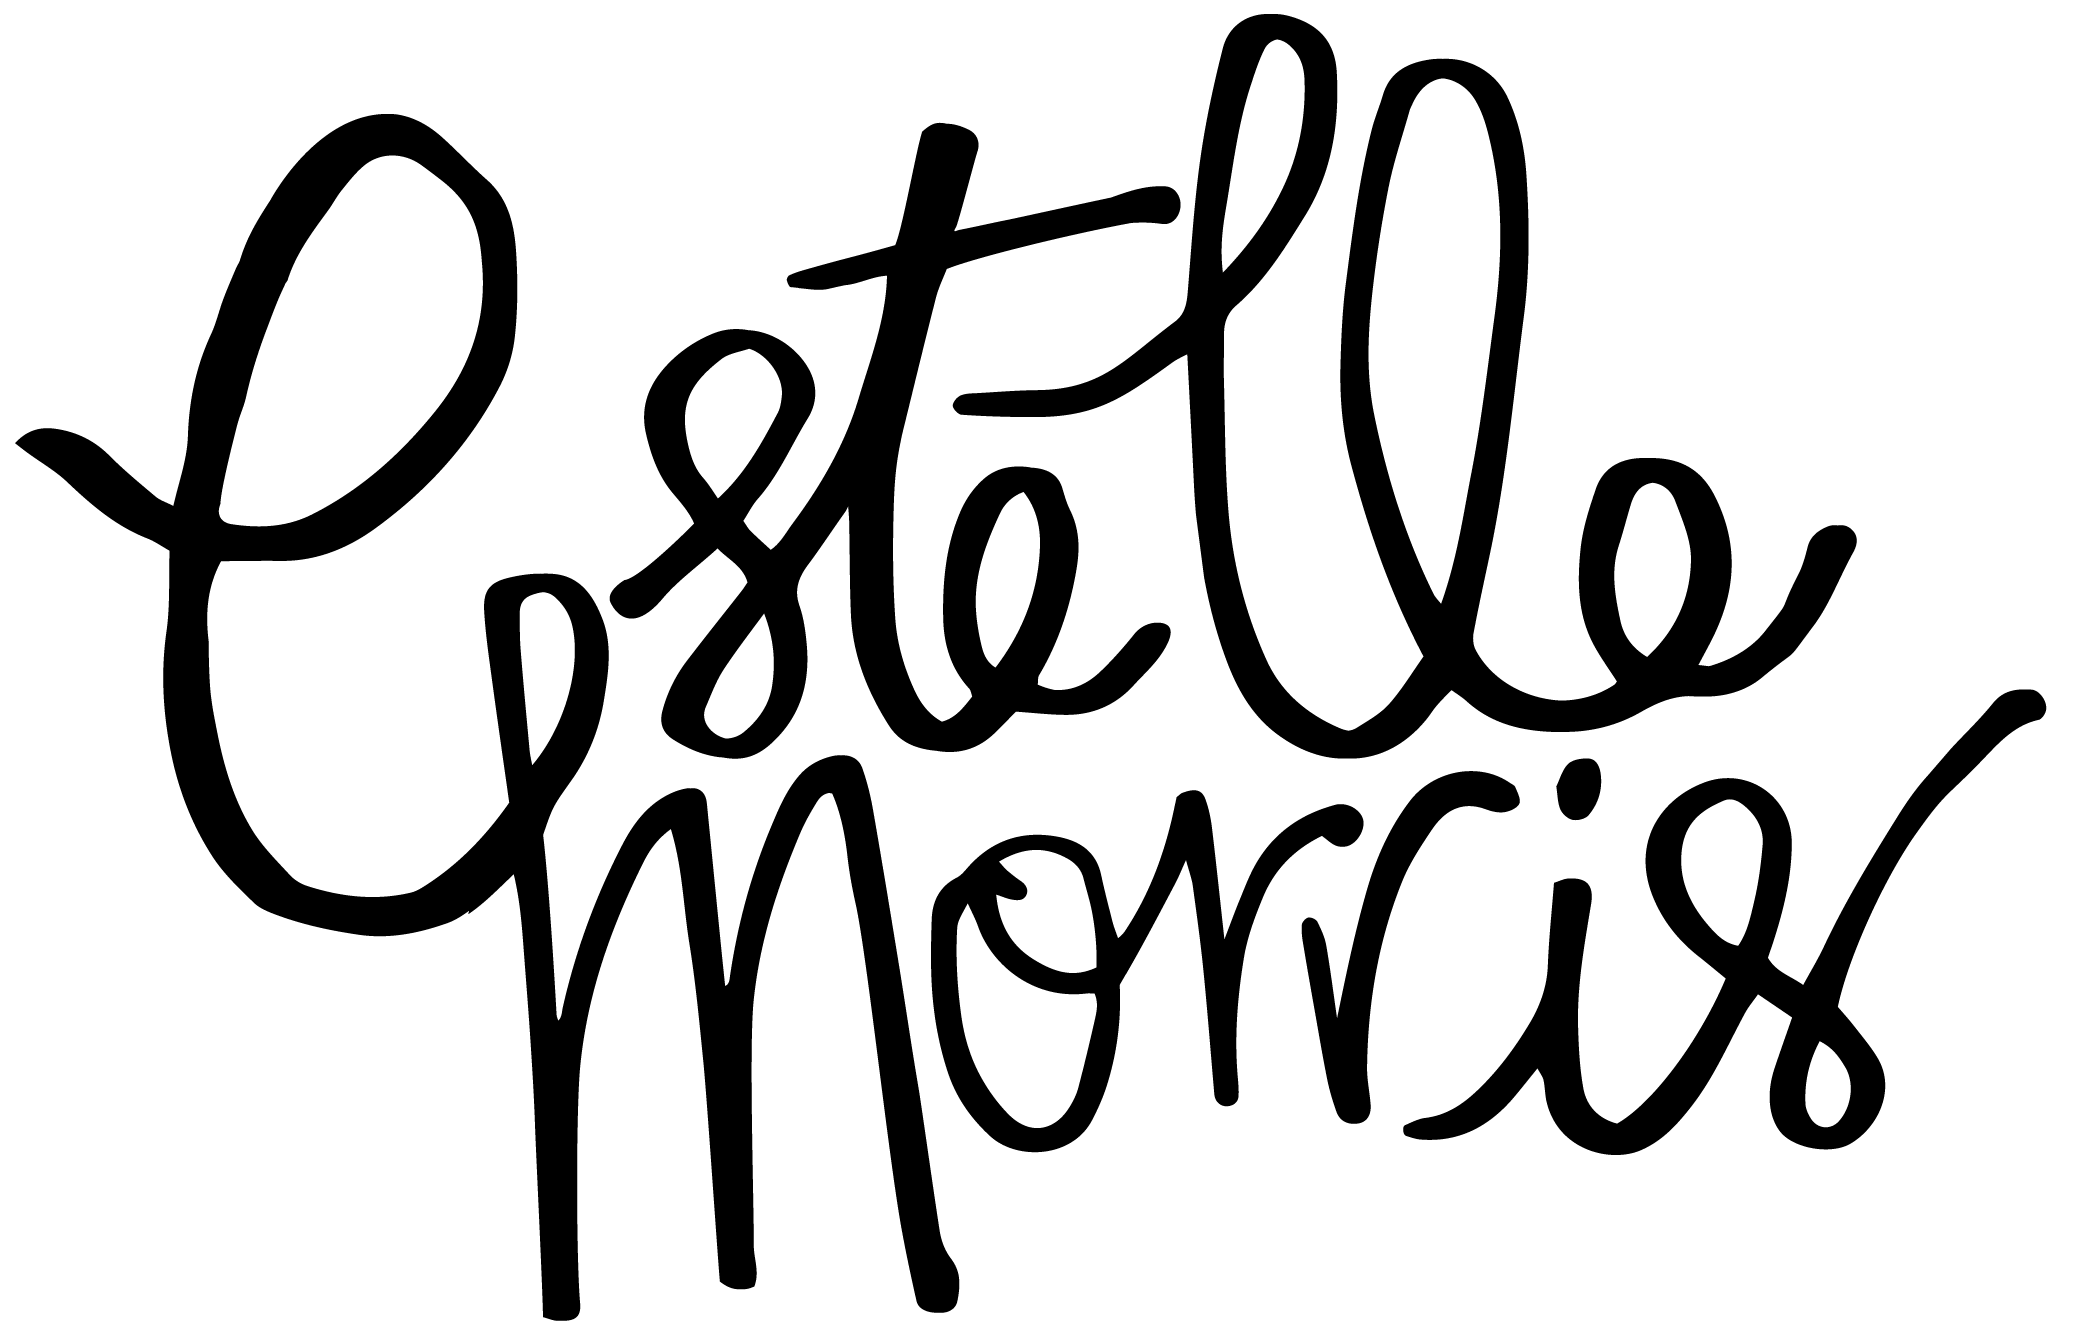 Estelle Morris